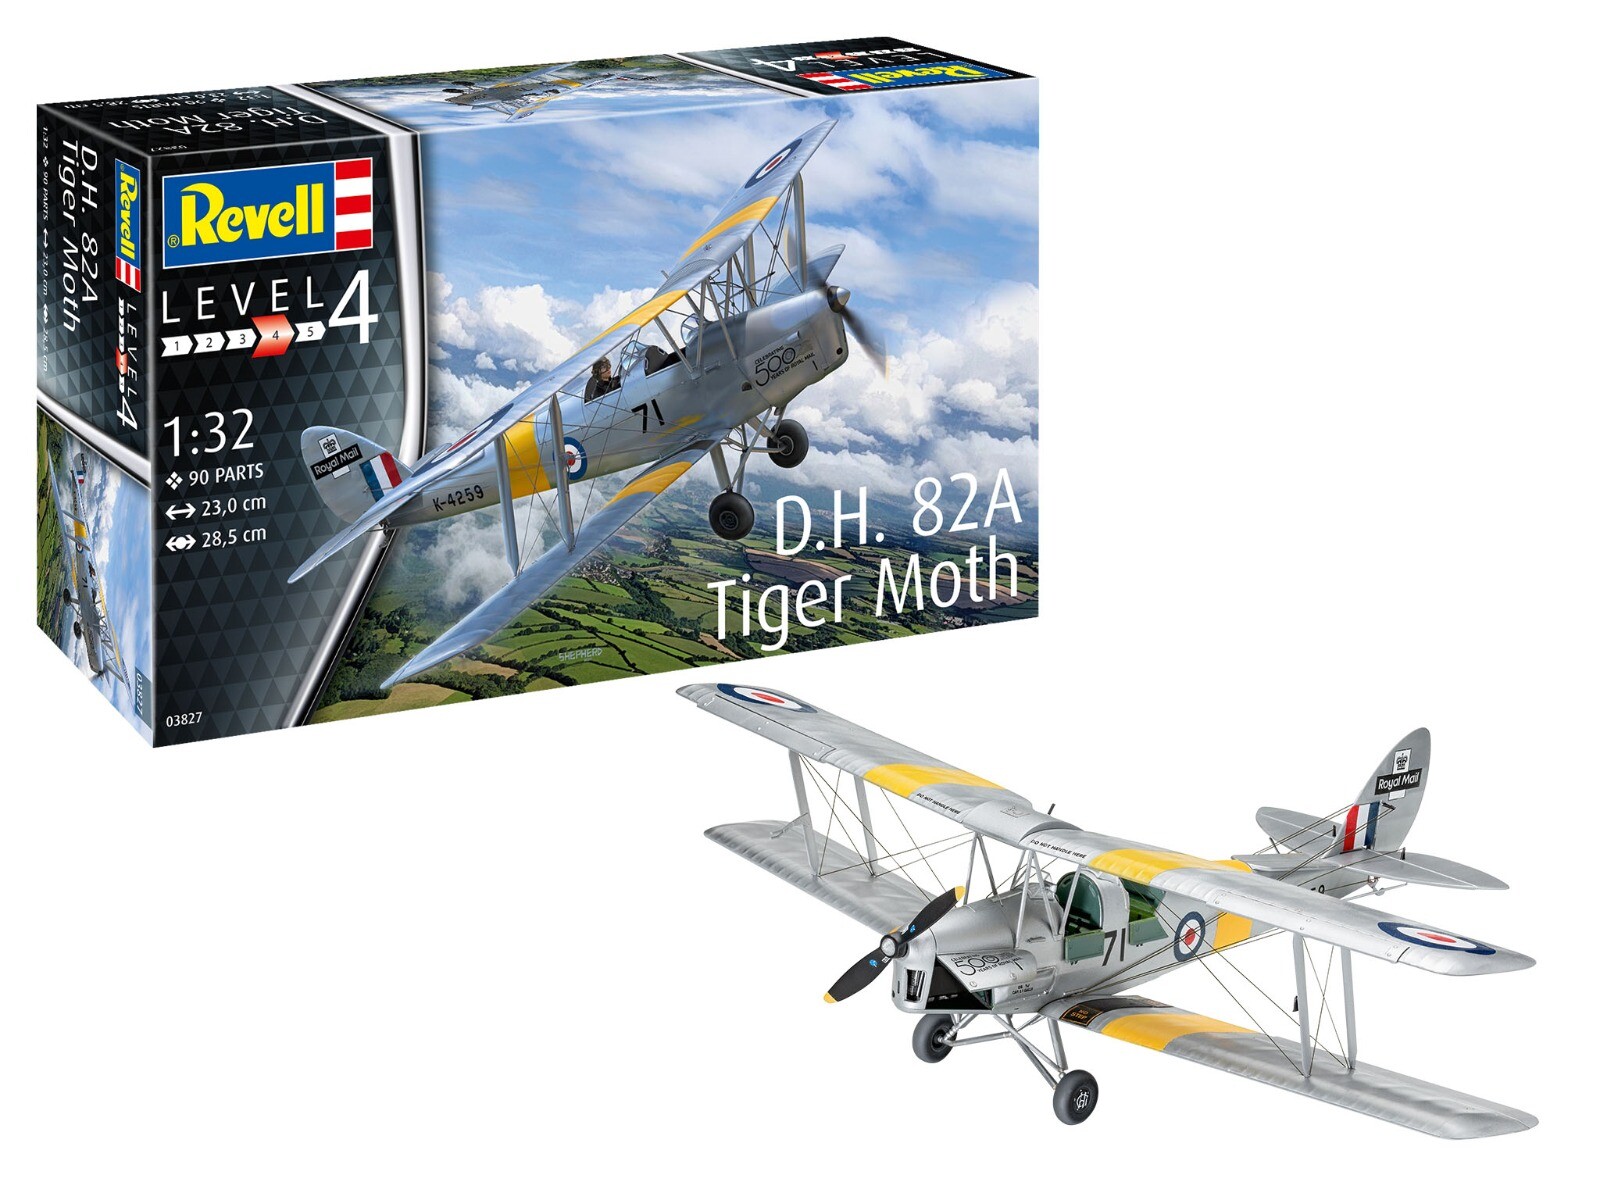 Revell 1/32 D.H. 82A Tiger Moth